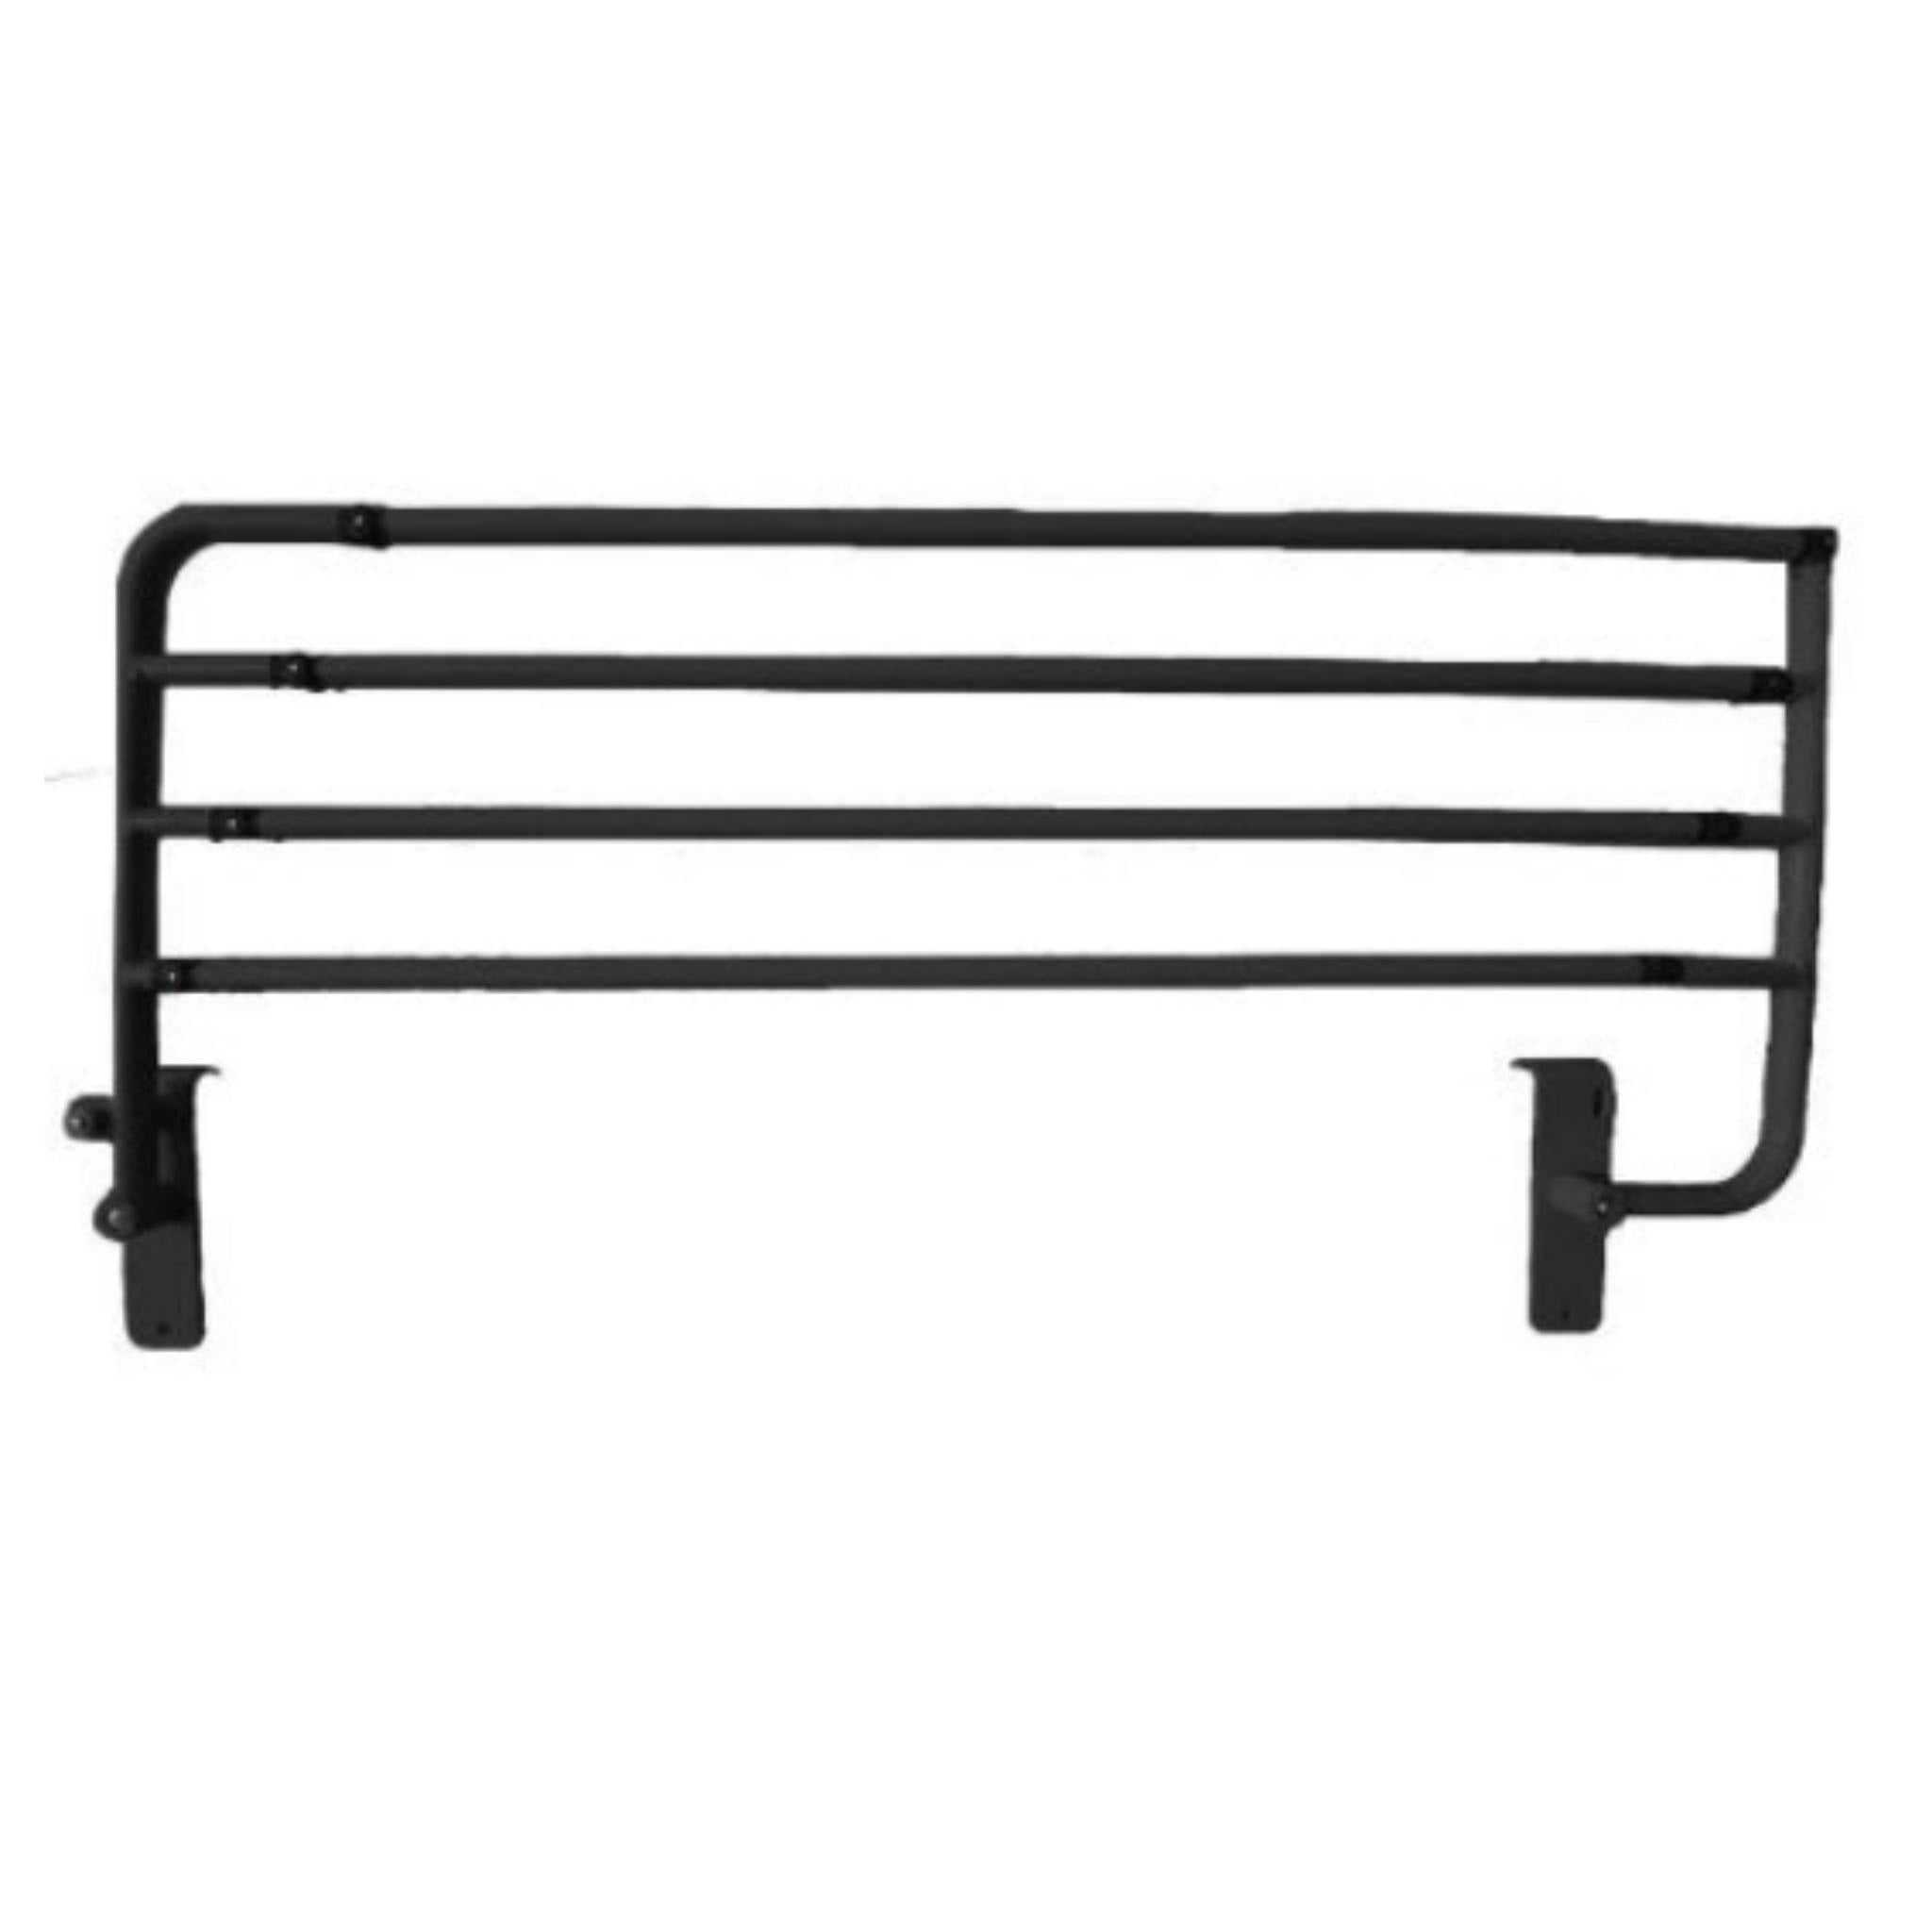 Full length bed rail - 1385mm (for Icare Beds)